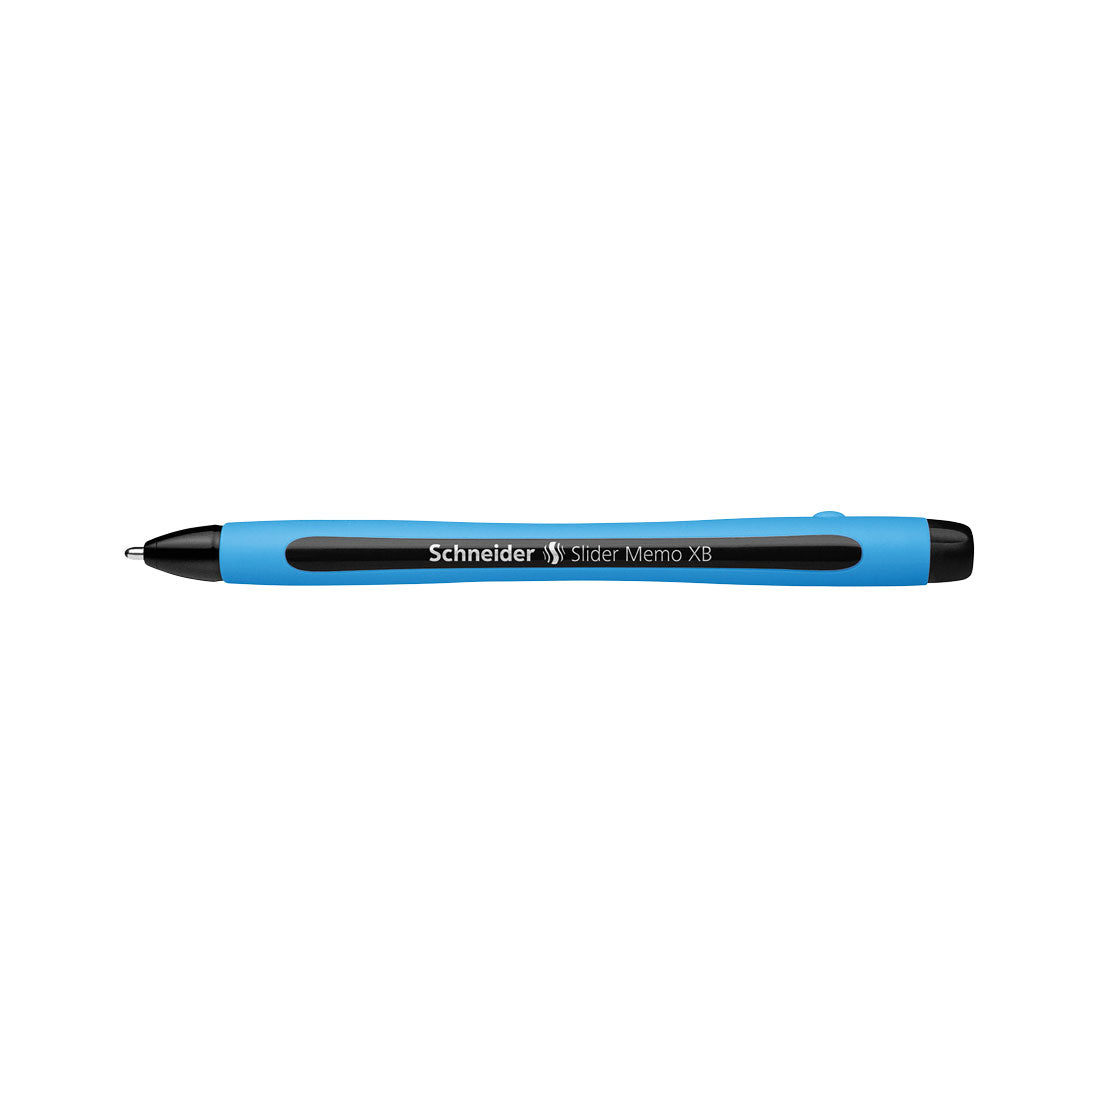 Memo Ballpoint Pens XB, Box of 10#colour_black